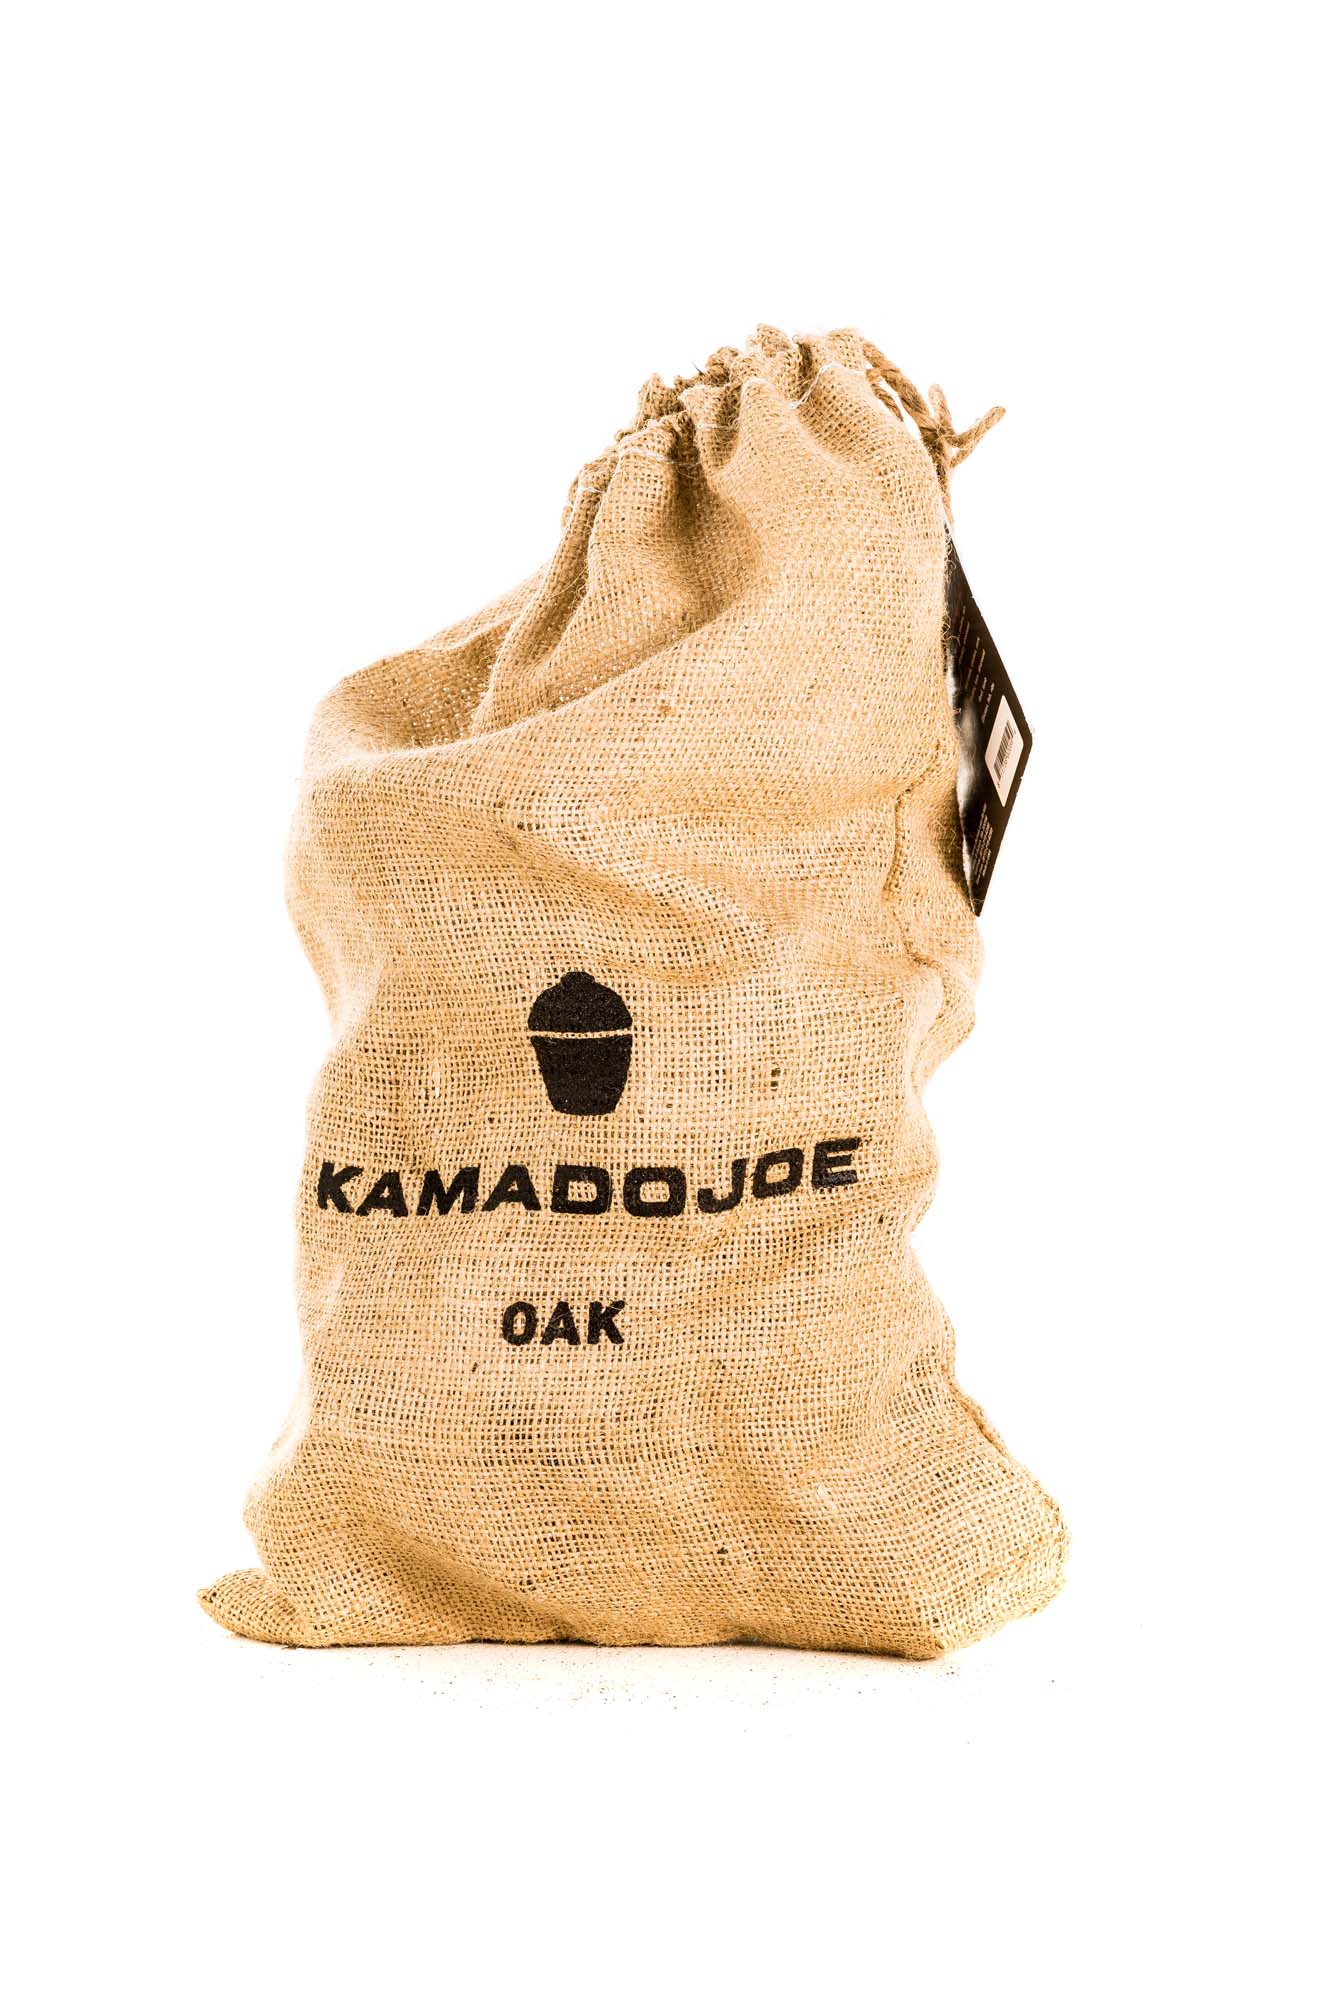 KAMADO JOE Oak Chunks 4.5 Kg